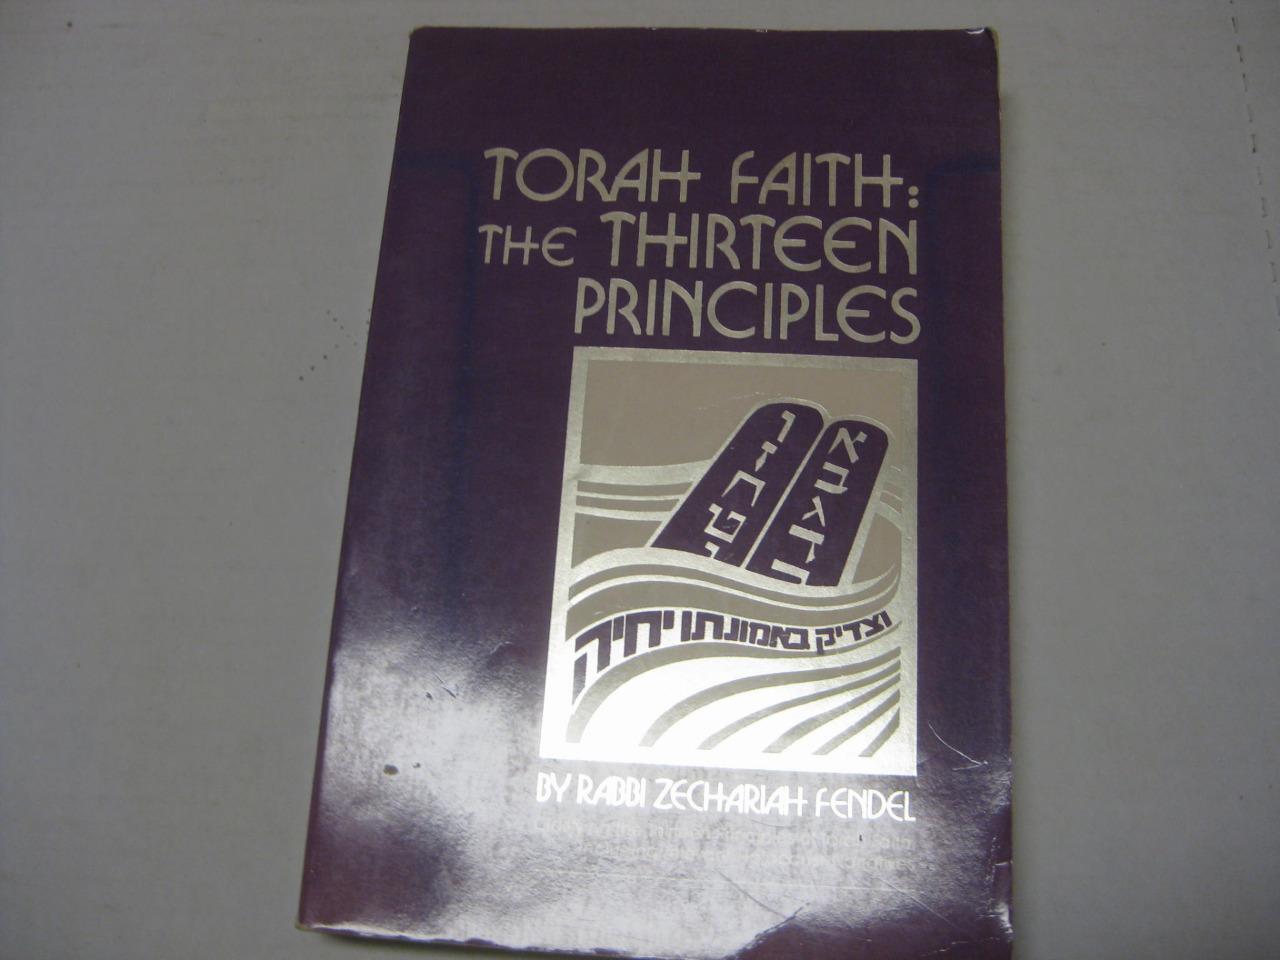 Torah faith--the thirteen principles: An exposition BY RABBI ZECHARIAH FENDEL